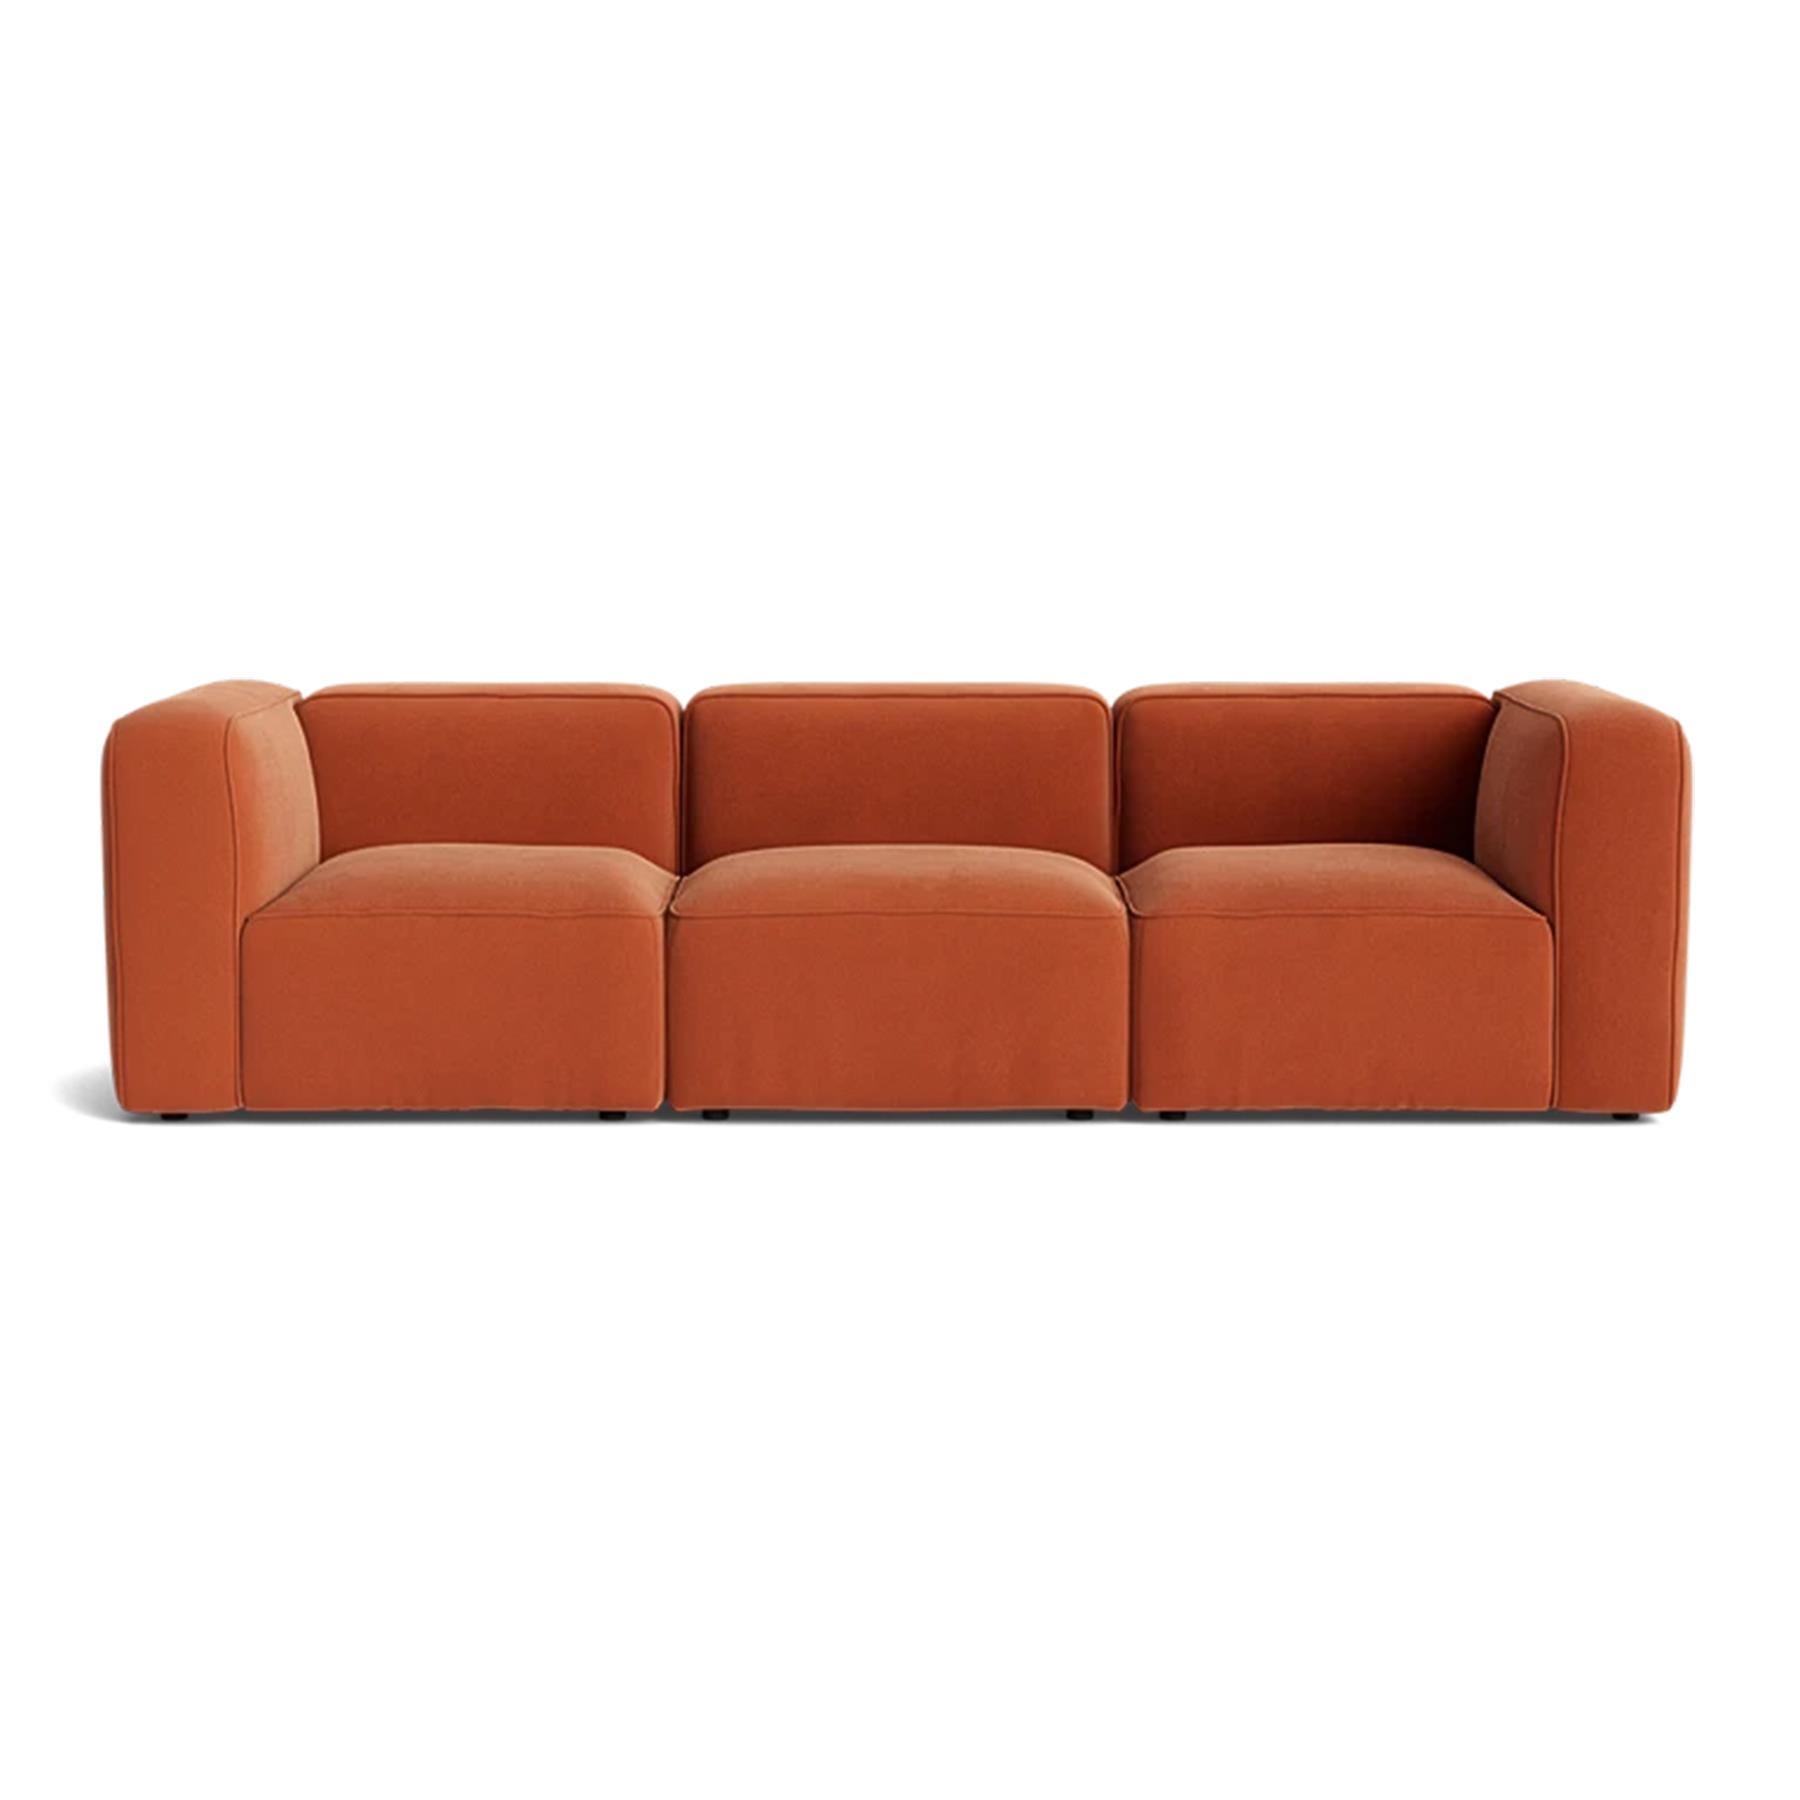 Make Nordic Basecamp 3 Seater Sofa Nordic Velvet 100 Orange Designer Furniture From Holloways Of Ludlow